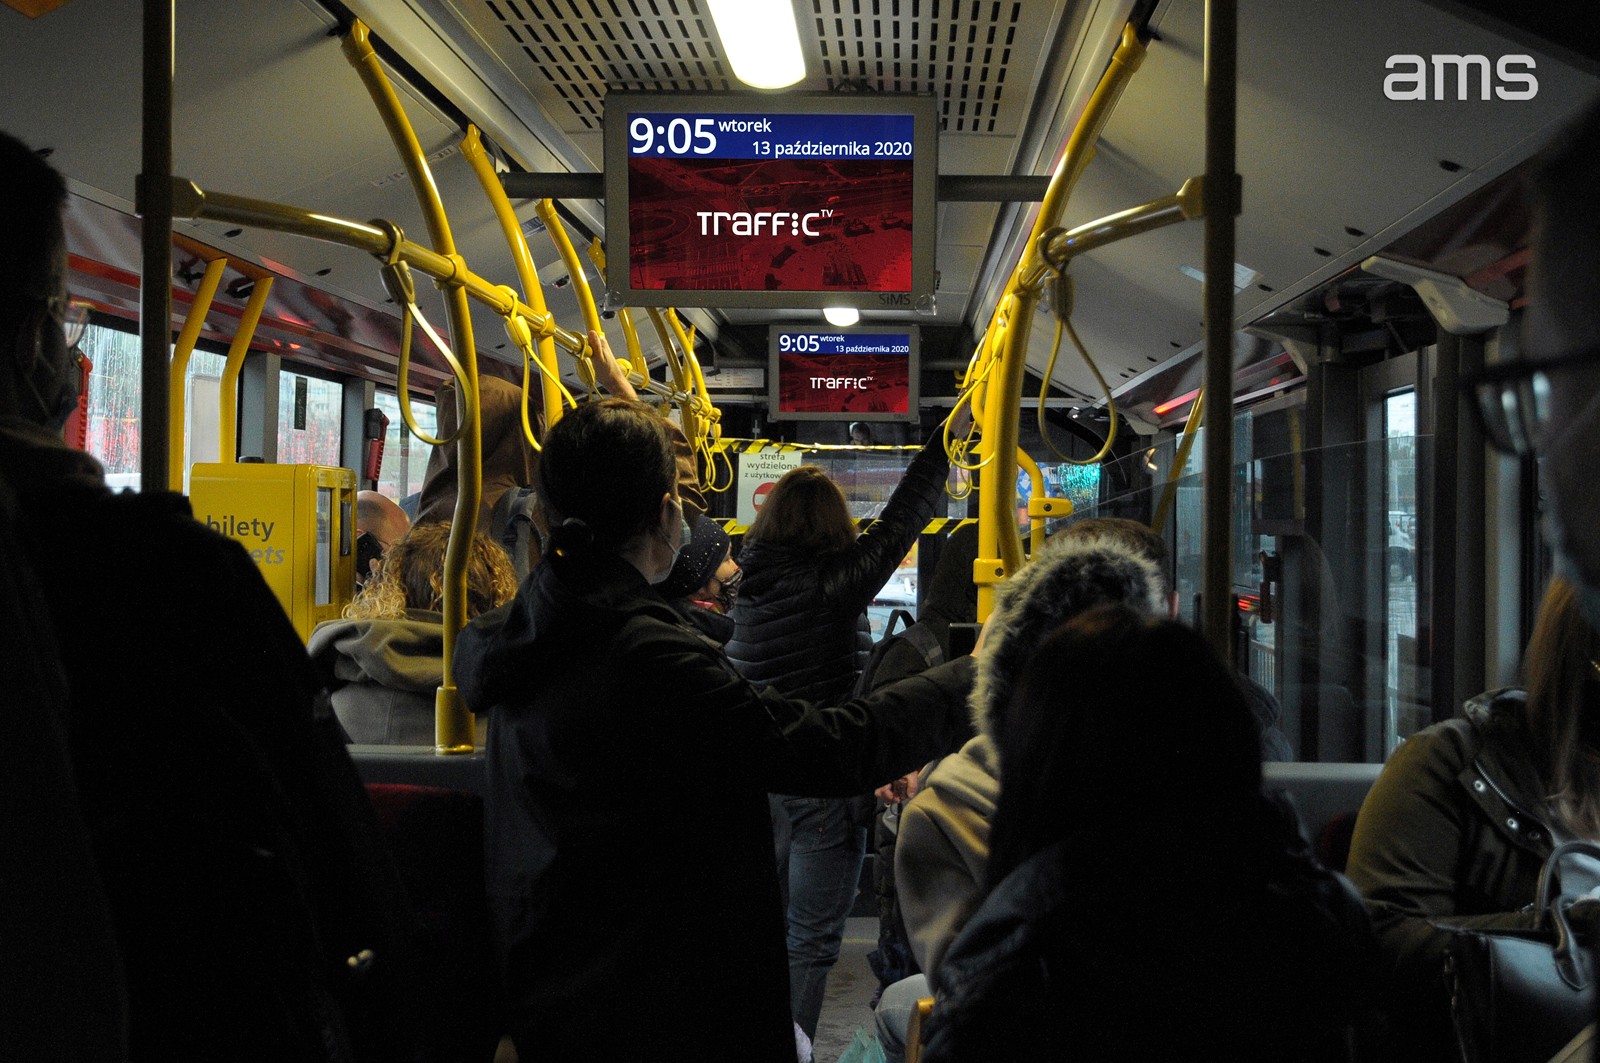 Traffic TV — AMS wprowadza kanał video out-of-home do autobusów